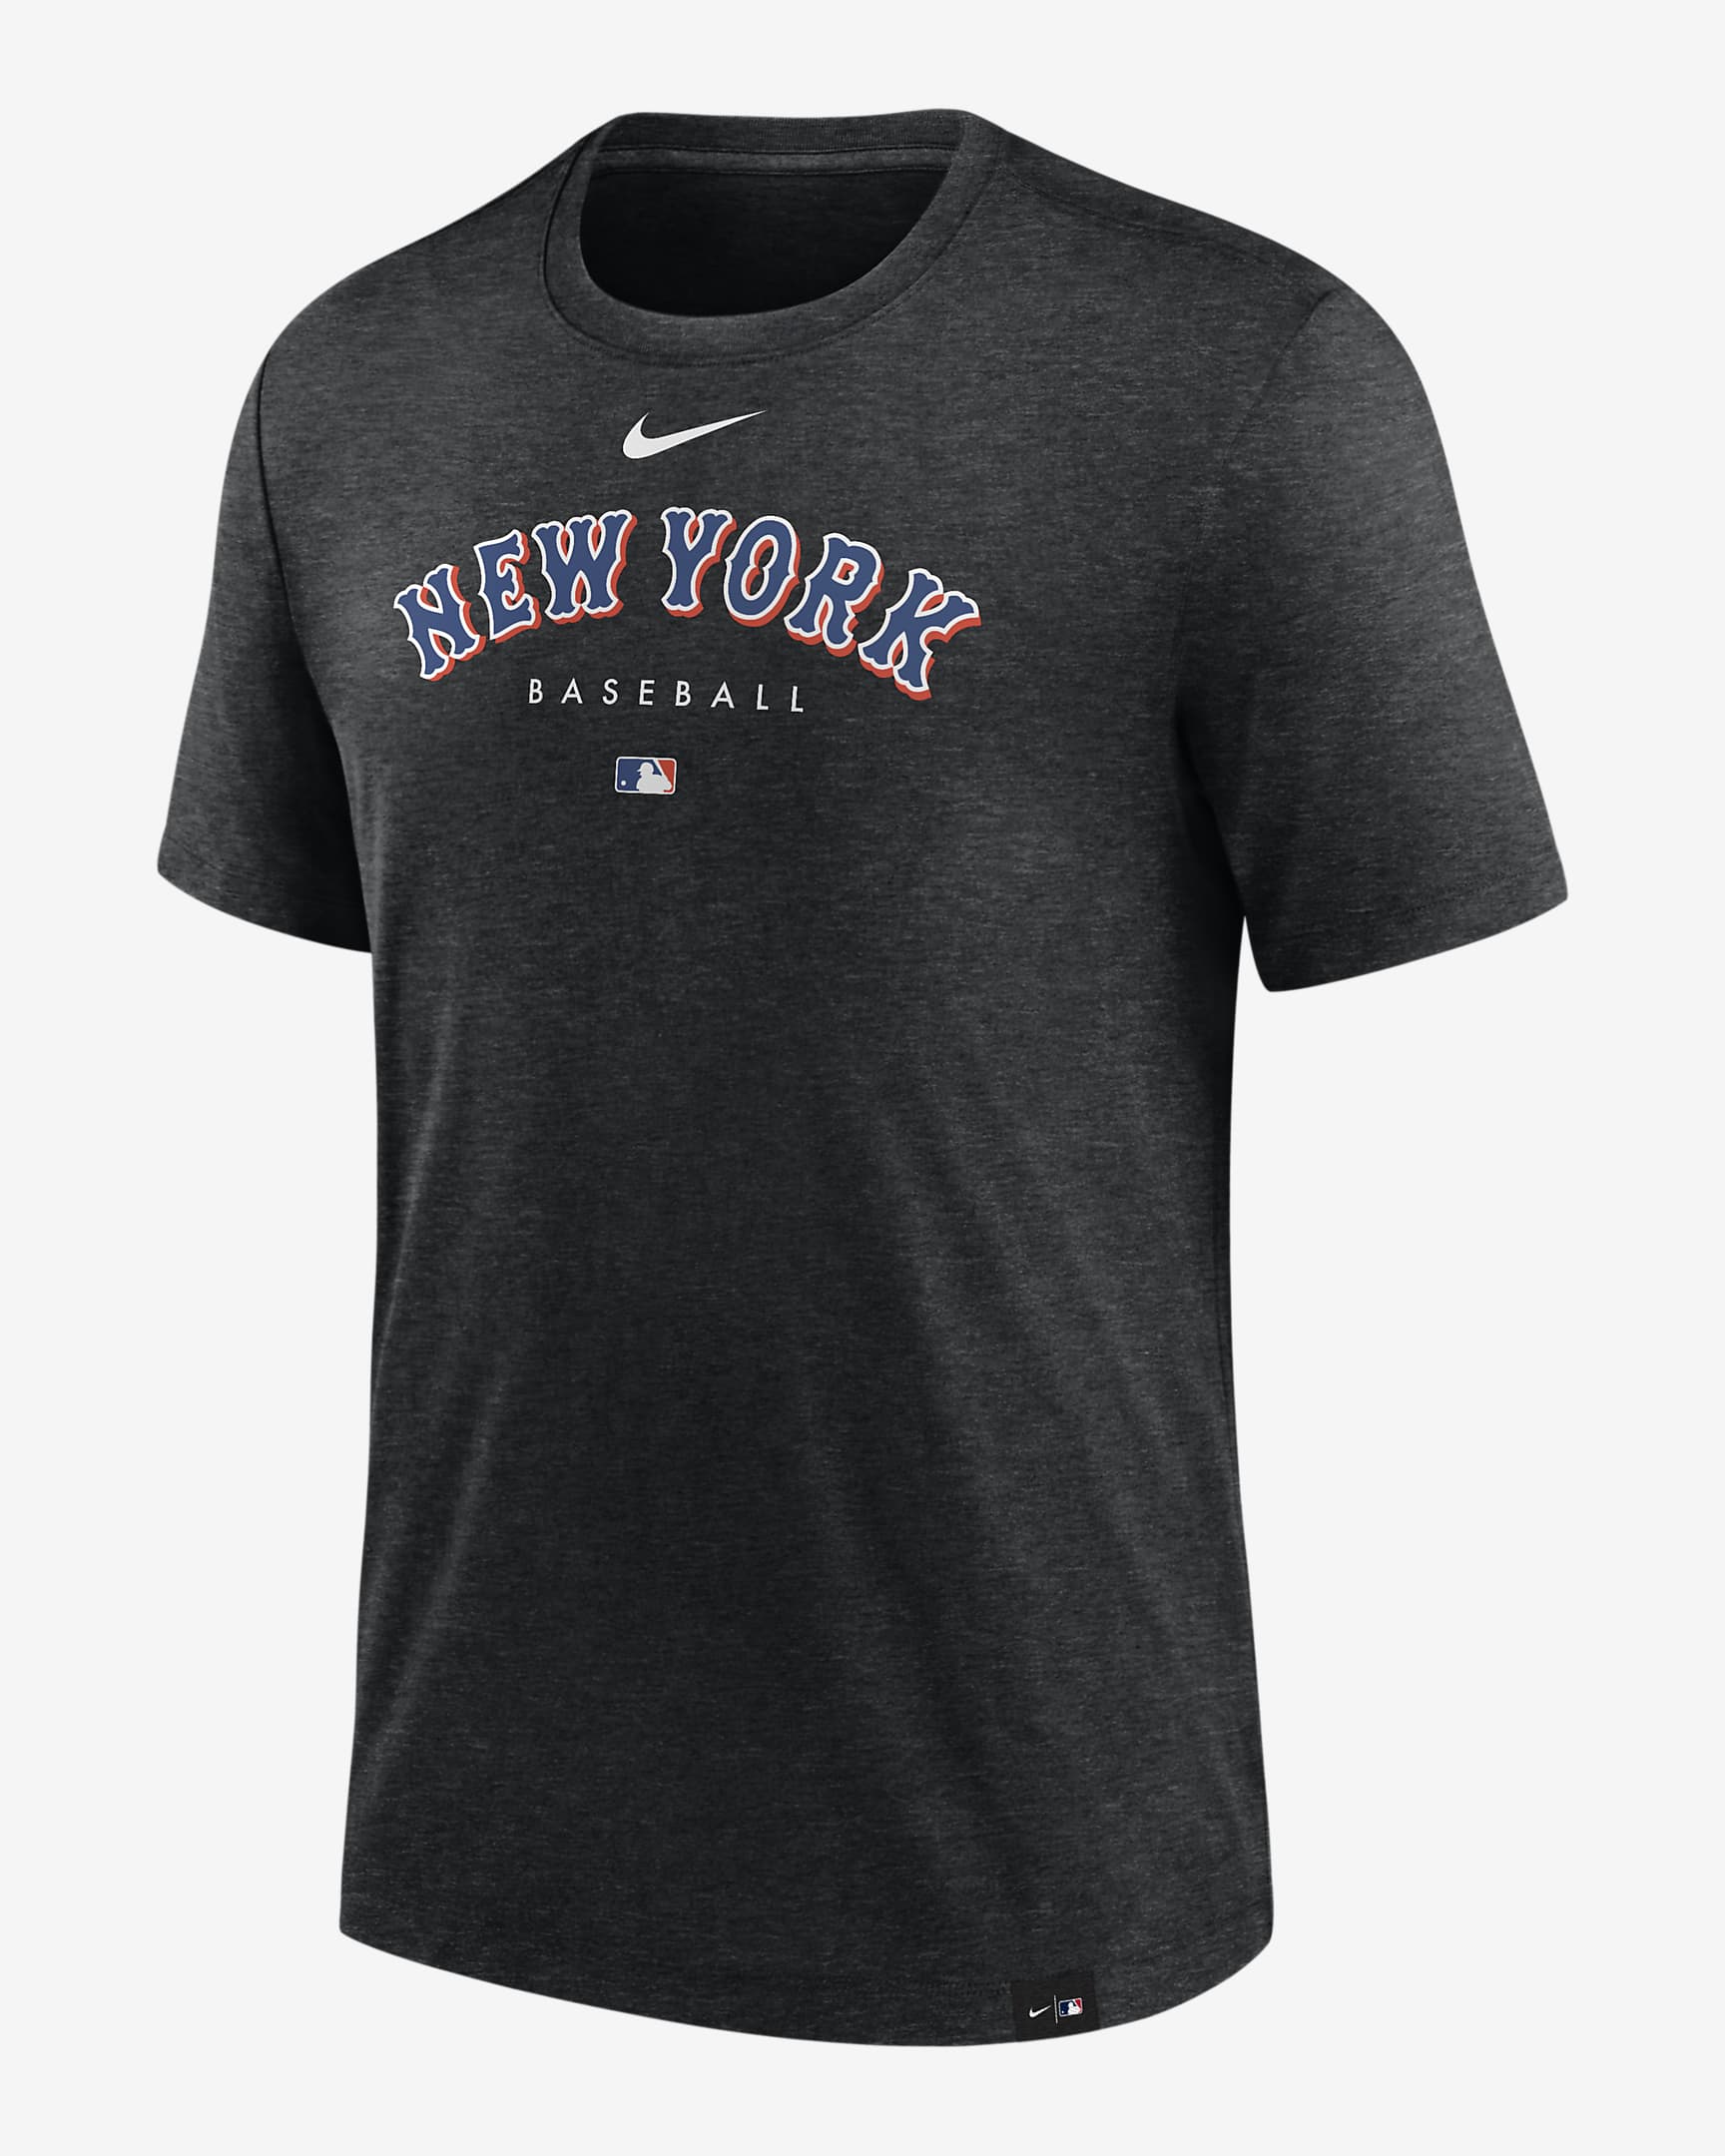 Nike Dri-FIT Early Work (MLB New York Mets) Men's T-Shirt. Nike.com